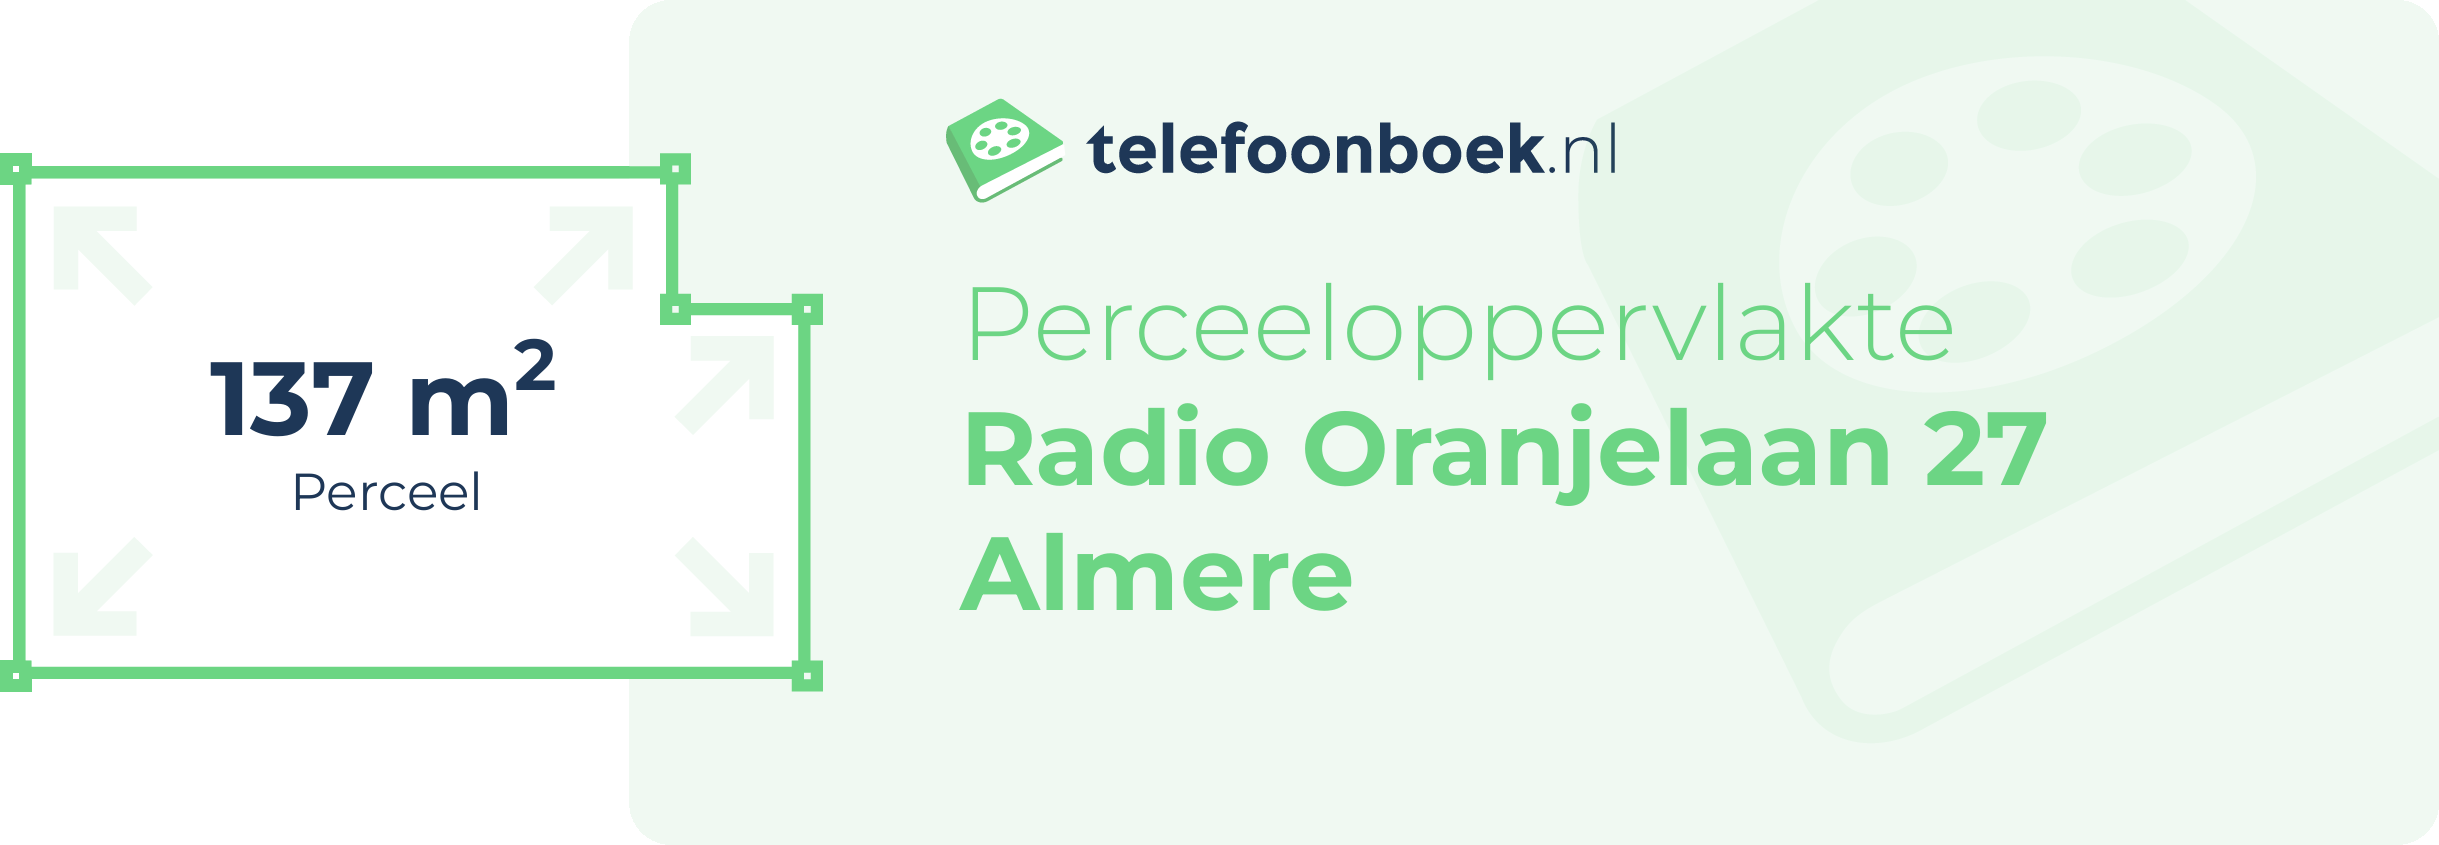 Perceeloppervlakte Radio Oranjelaan 27 Almere